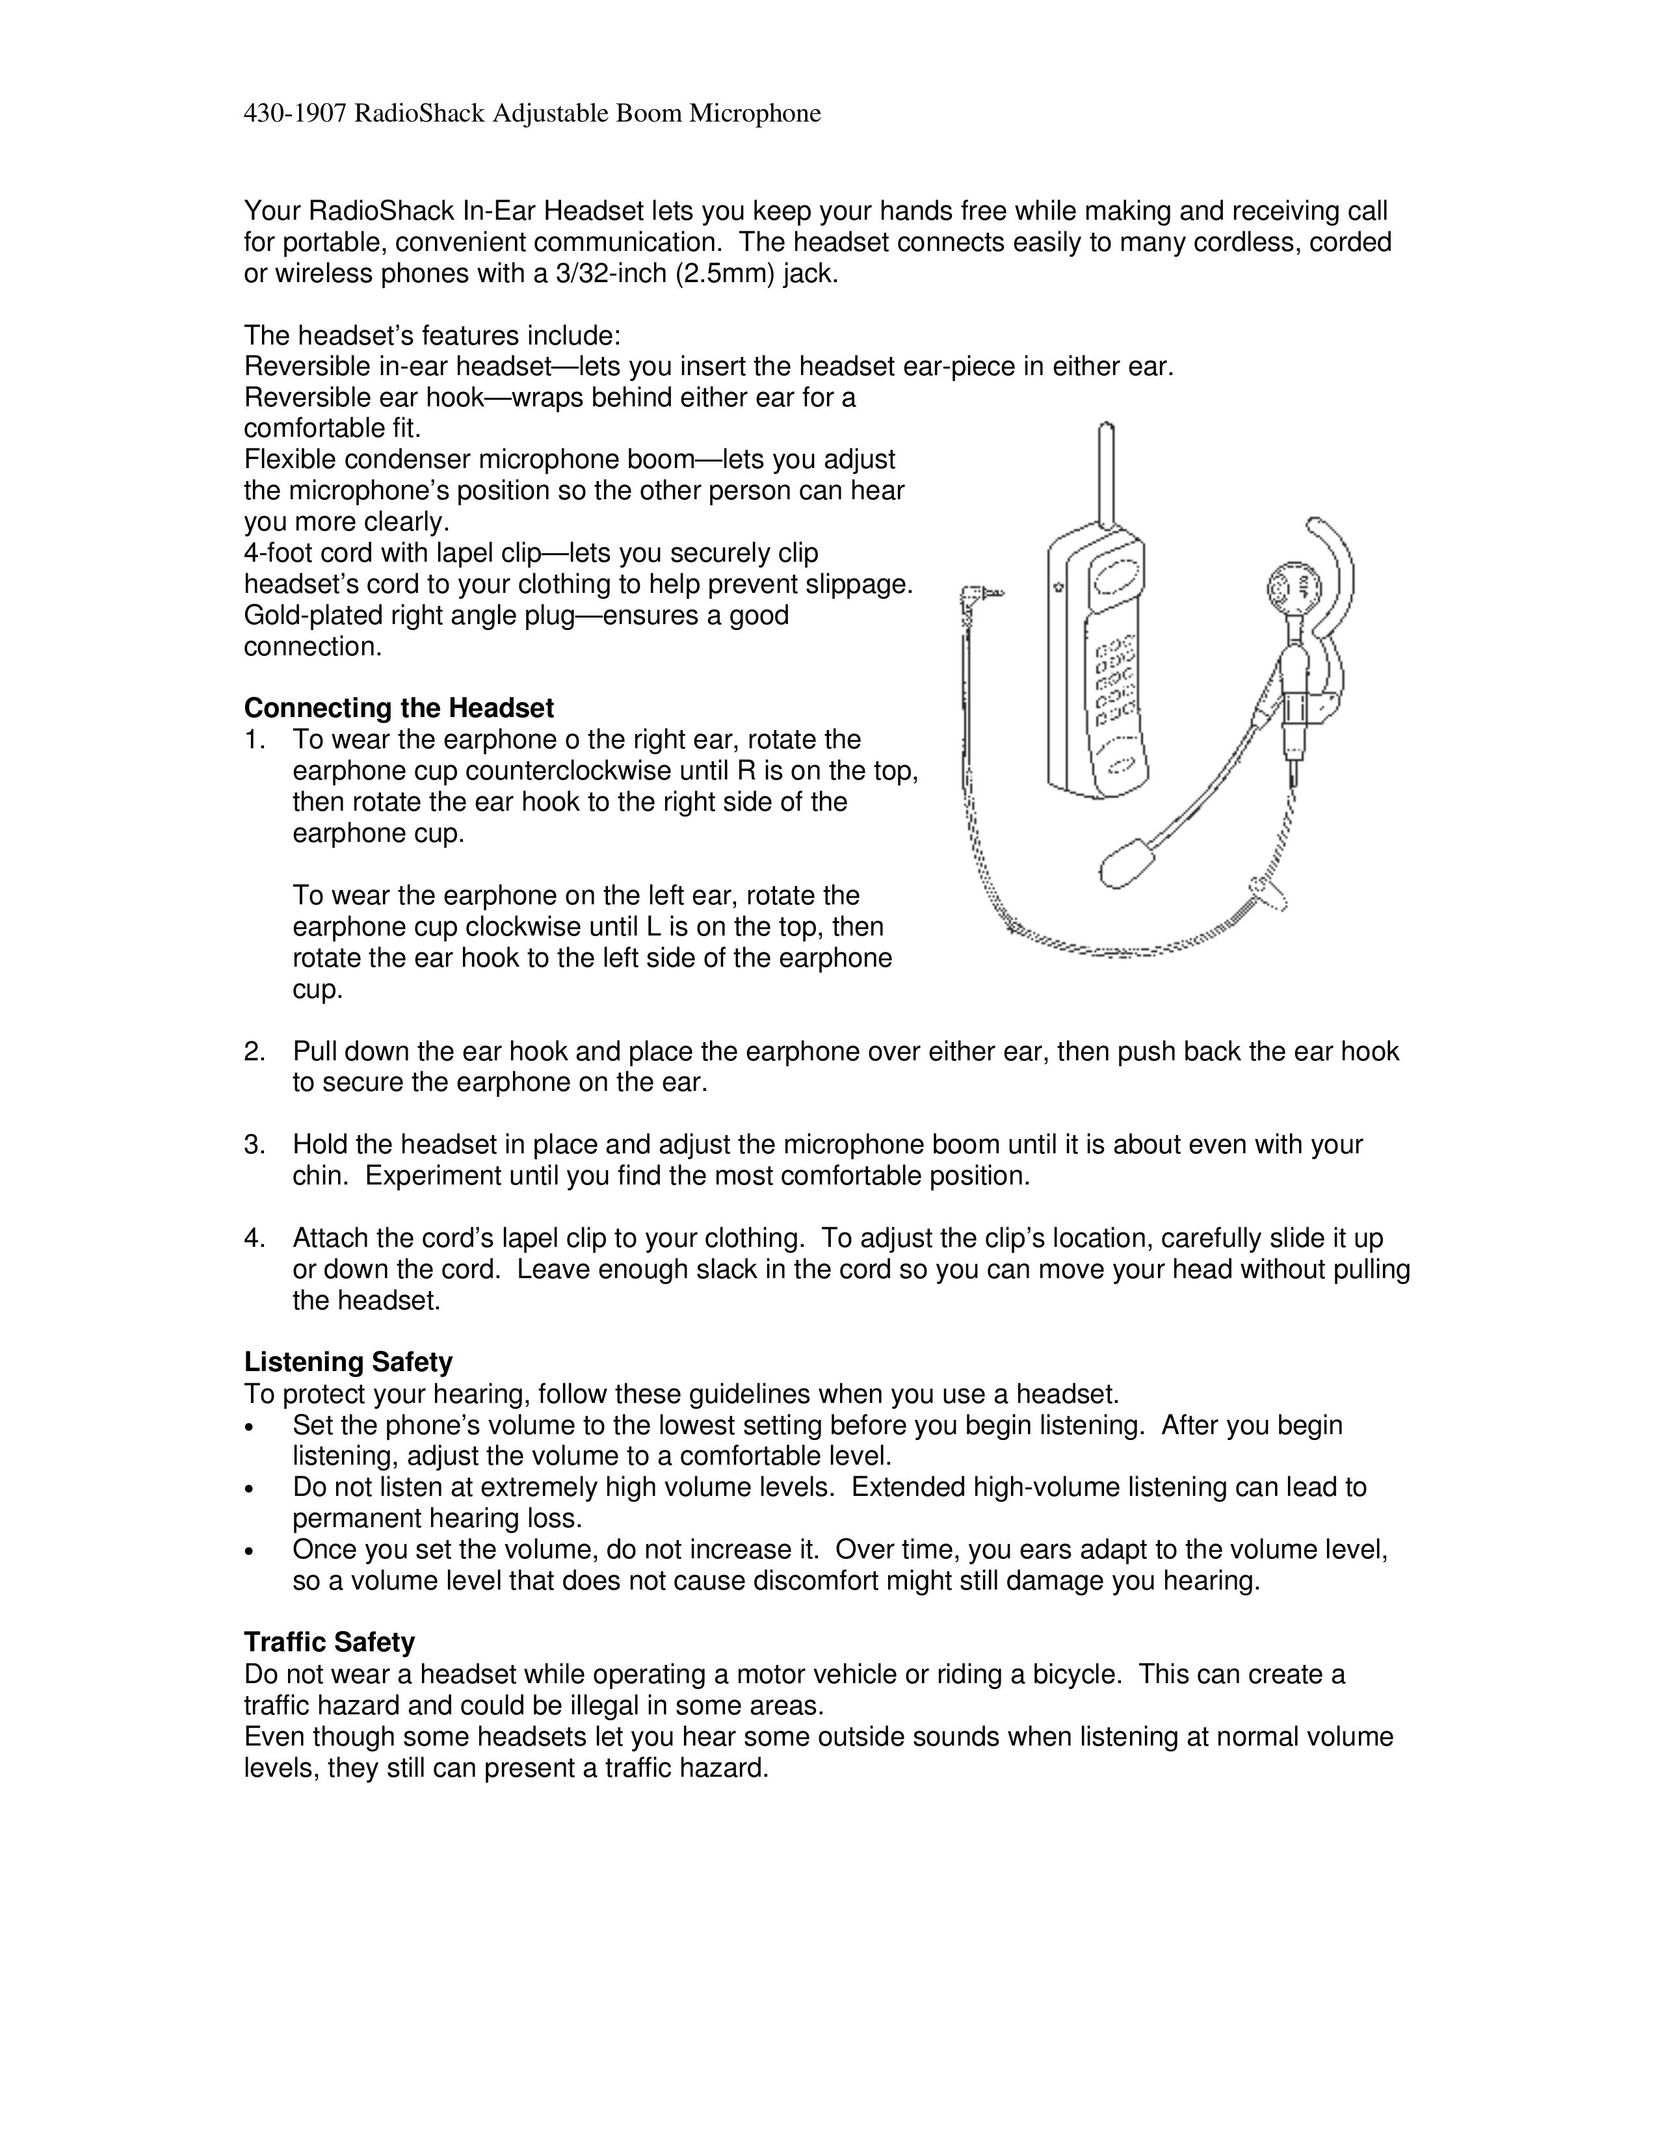 Radio Shack 430-1907 Headphones User Manual